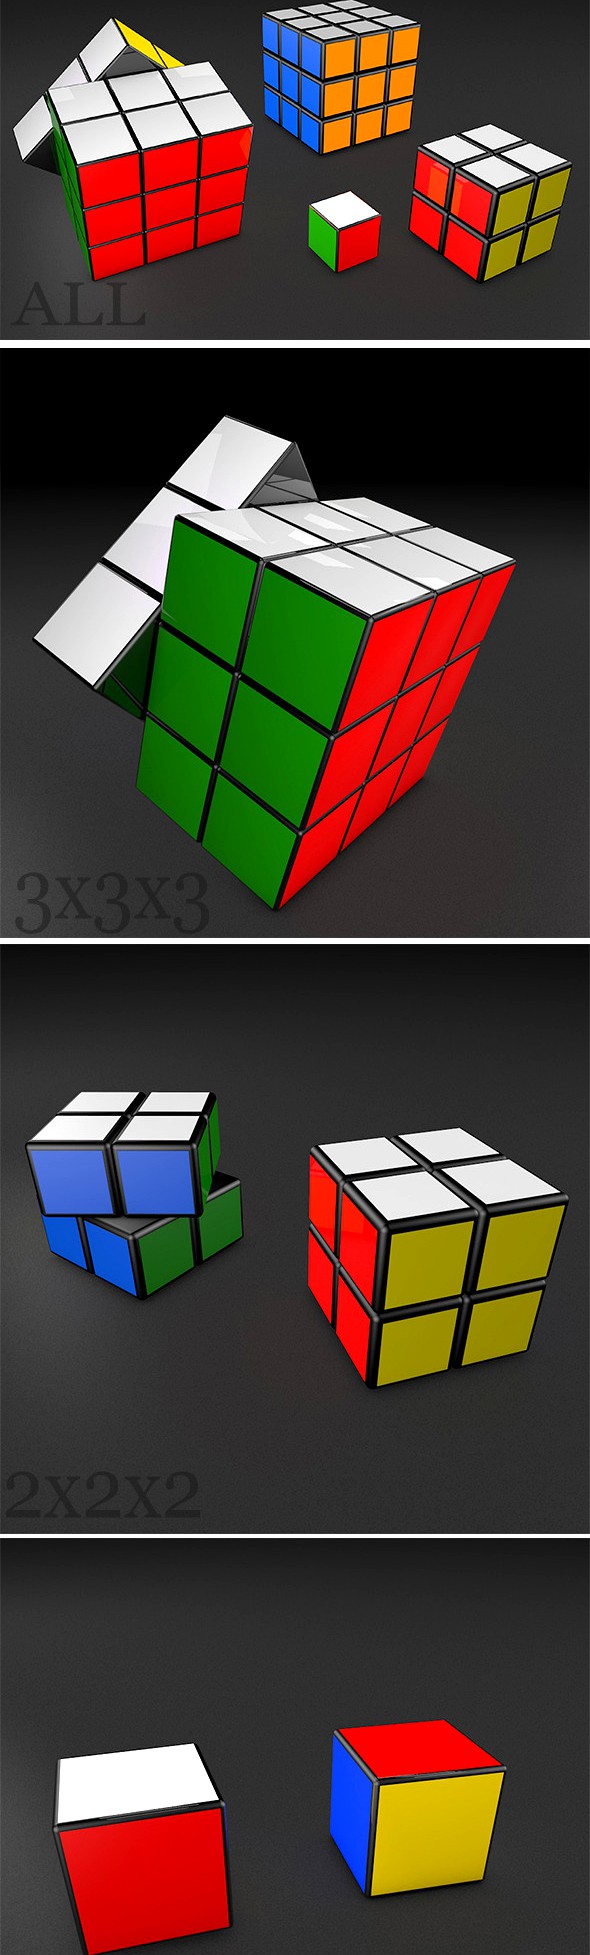 3 Rubik&#x27;s Cube